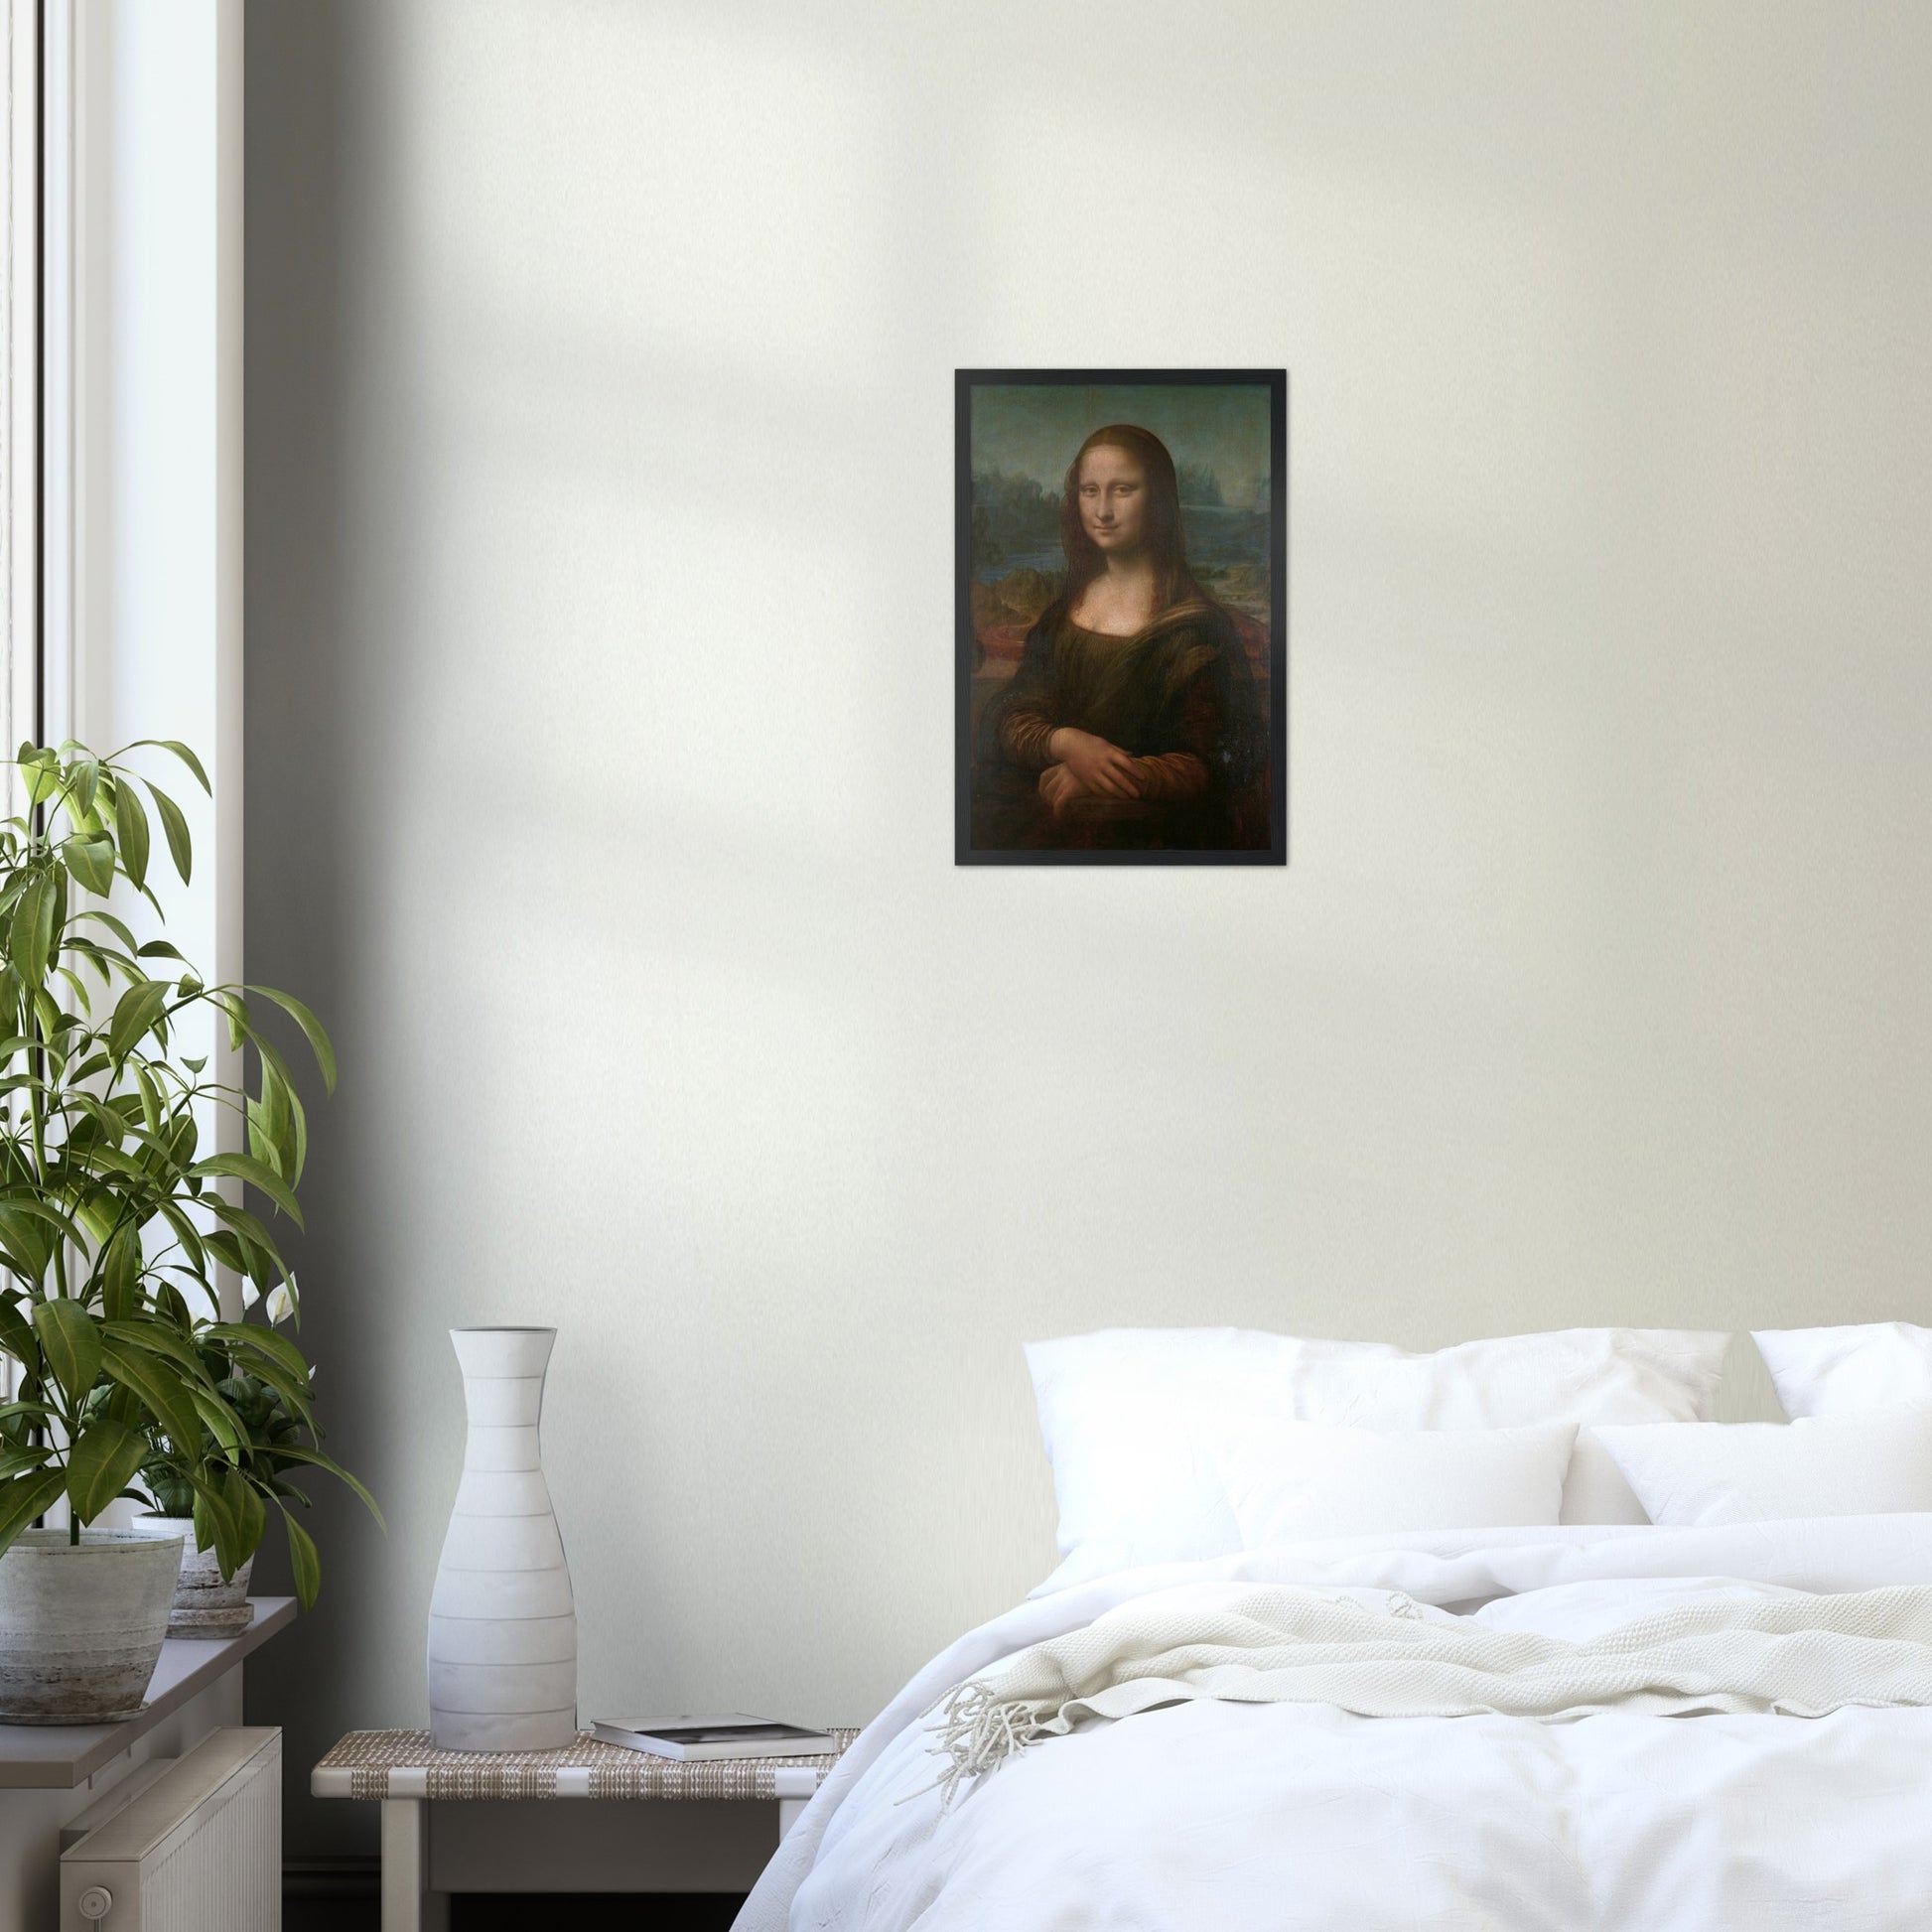 Mona Lisa Reproduktion Kunst Druck 30x45cm - Holzgerahmtes Poster auf matten Papier in Museumsqualität Art Loft